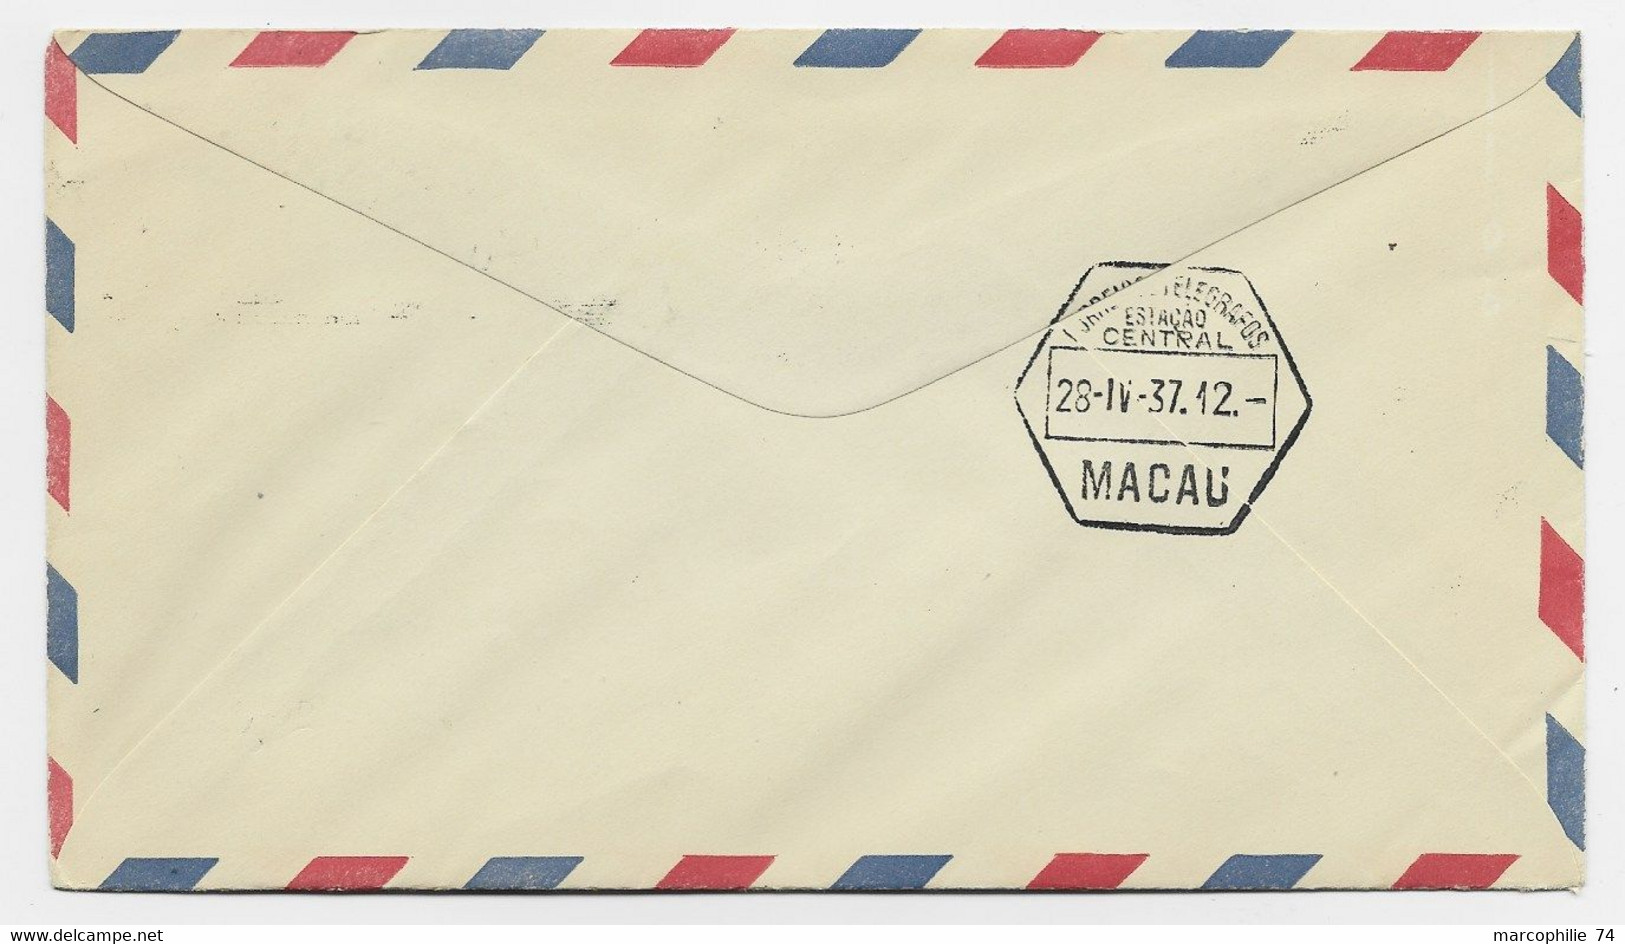 USA LETTRE COVER AIR MAIL FIRST FLIGHT ASIA GUAM MACAO APR 27 1937 TO USA - Poste Aérienne